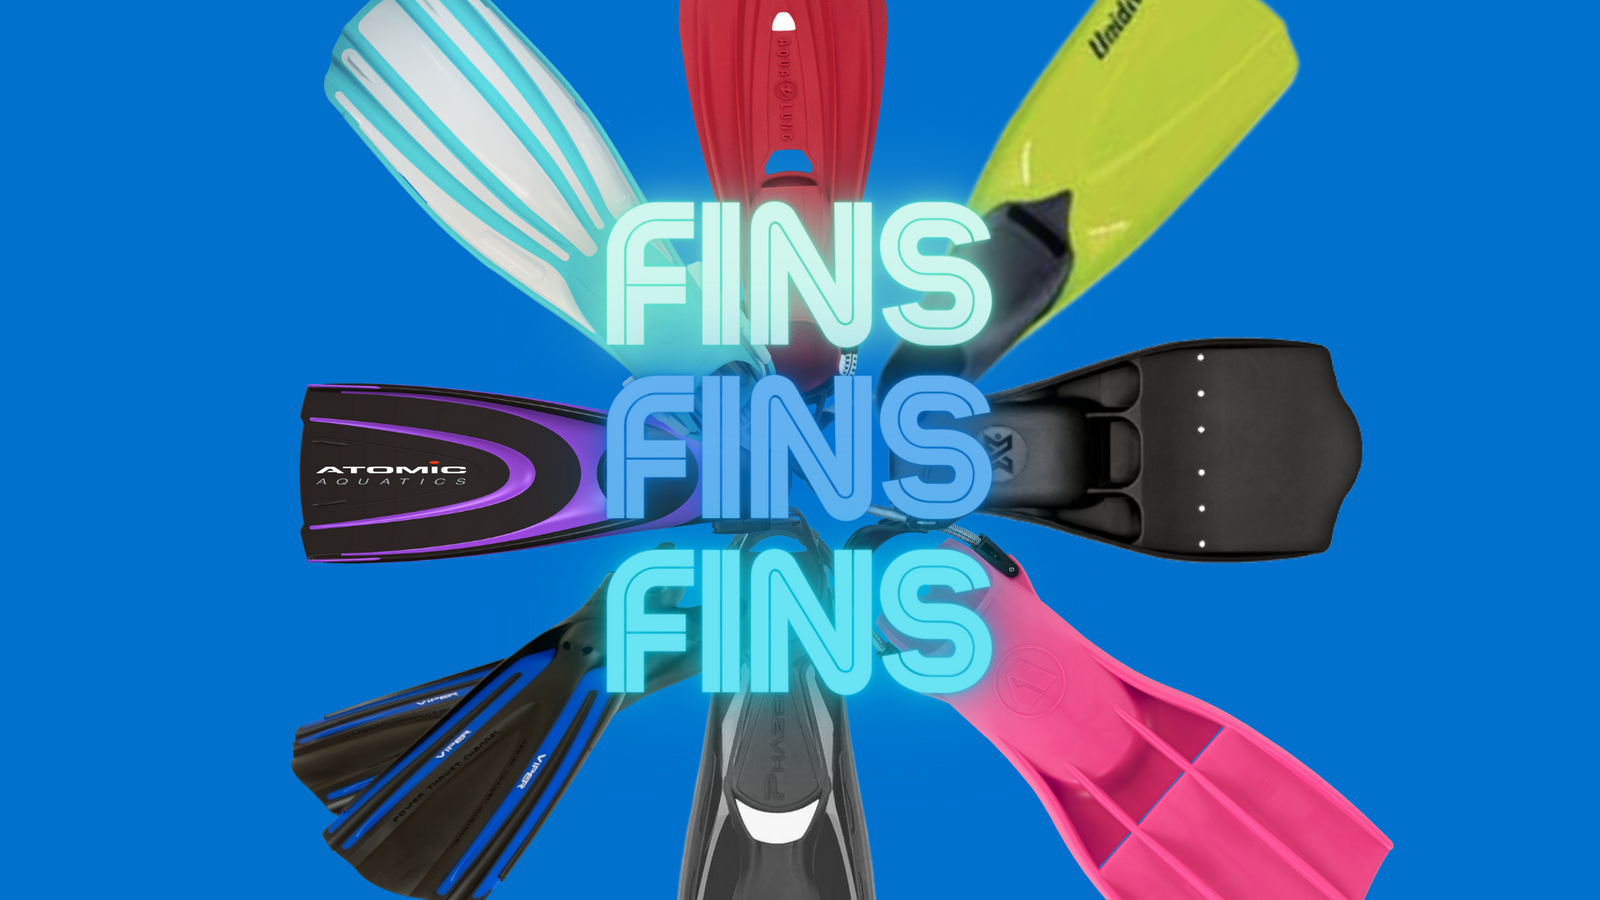 Choosing Fins